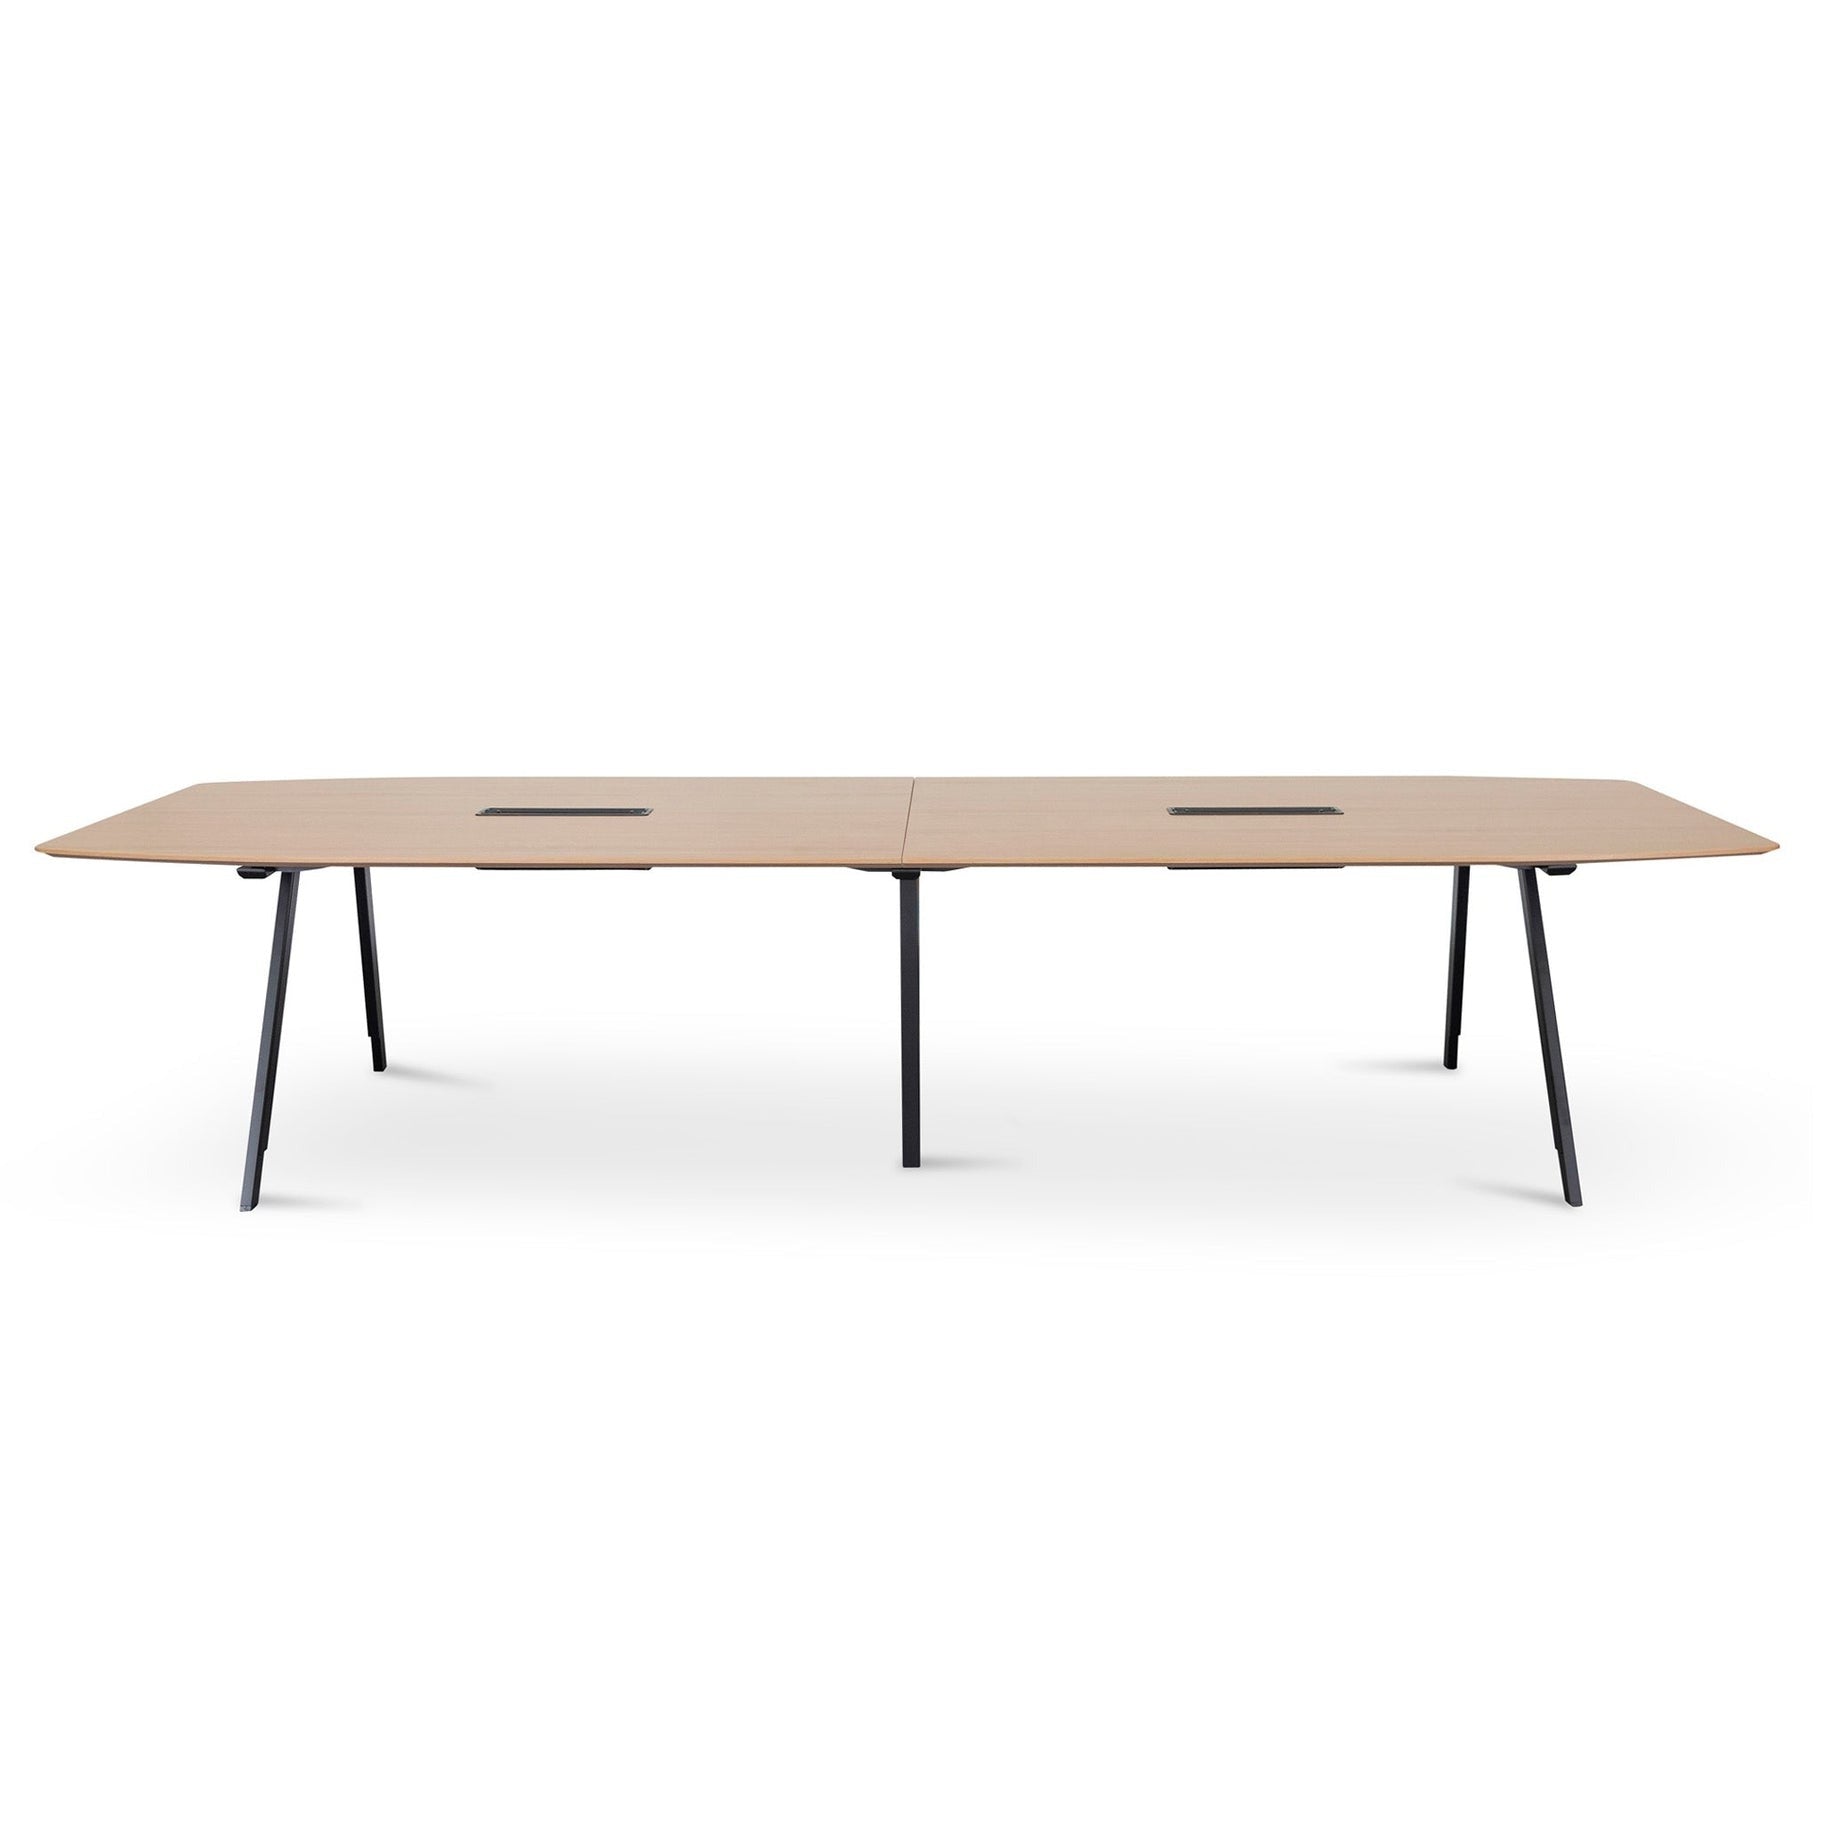 Vogue 3.6m Natural Boardroom Meeting Table - Full Black Legs